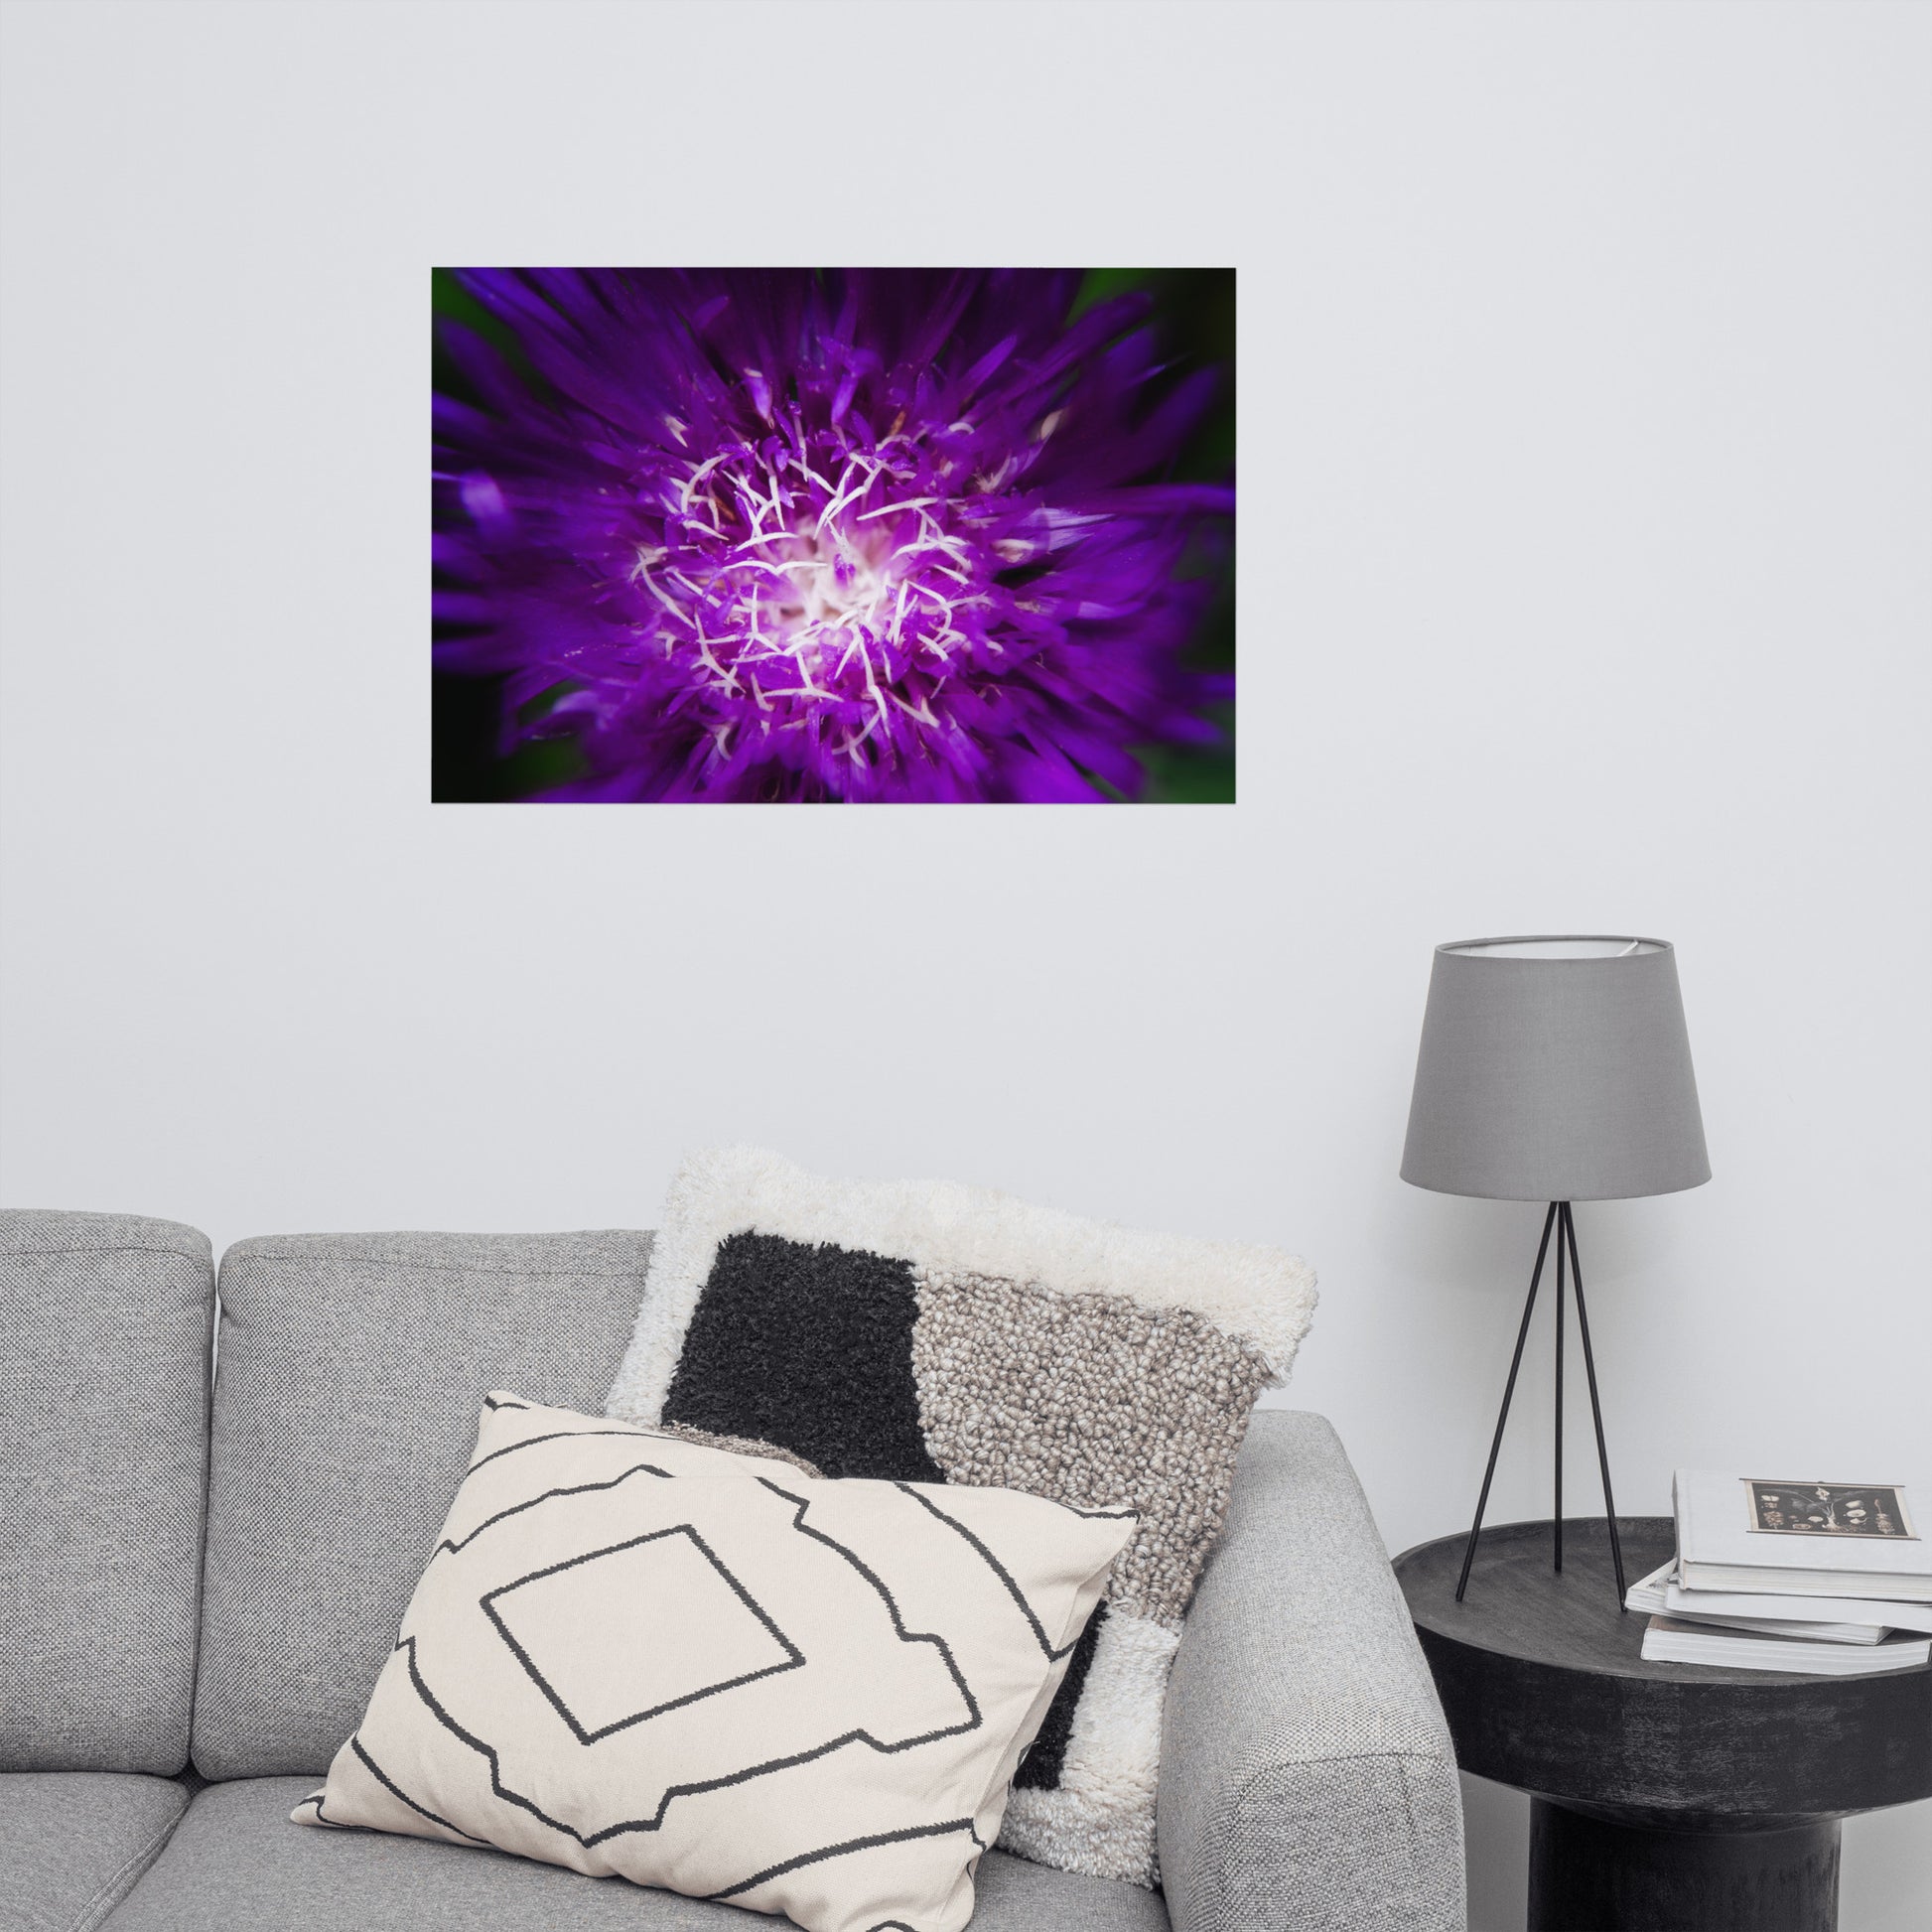 Living Room Wall Decor Minimalist: Dark Purple and White Aster Bloom Close-up - Botanical / Floral / Flora / Flowers / Nature Photograph Loose / Unframed / Frameless / Frameable Wall Art Print - Artwork